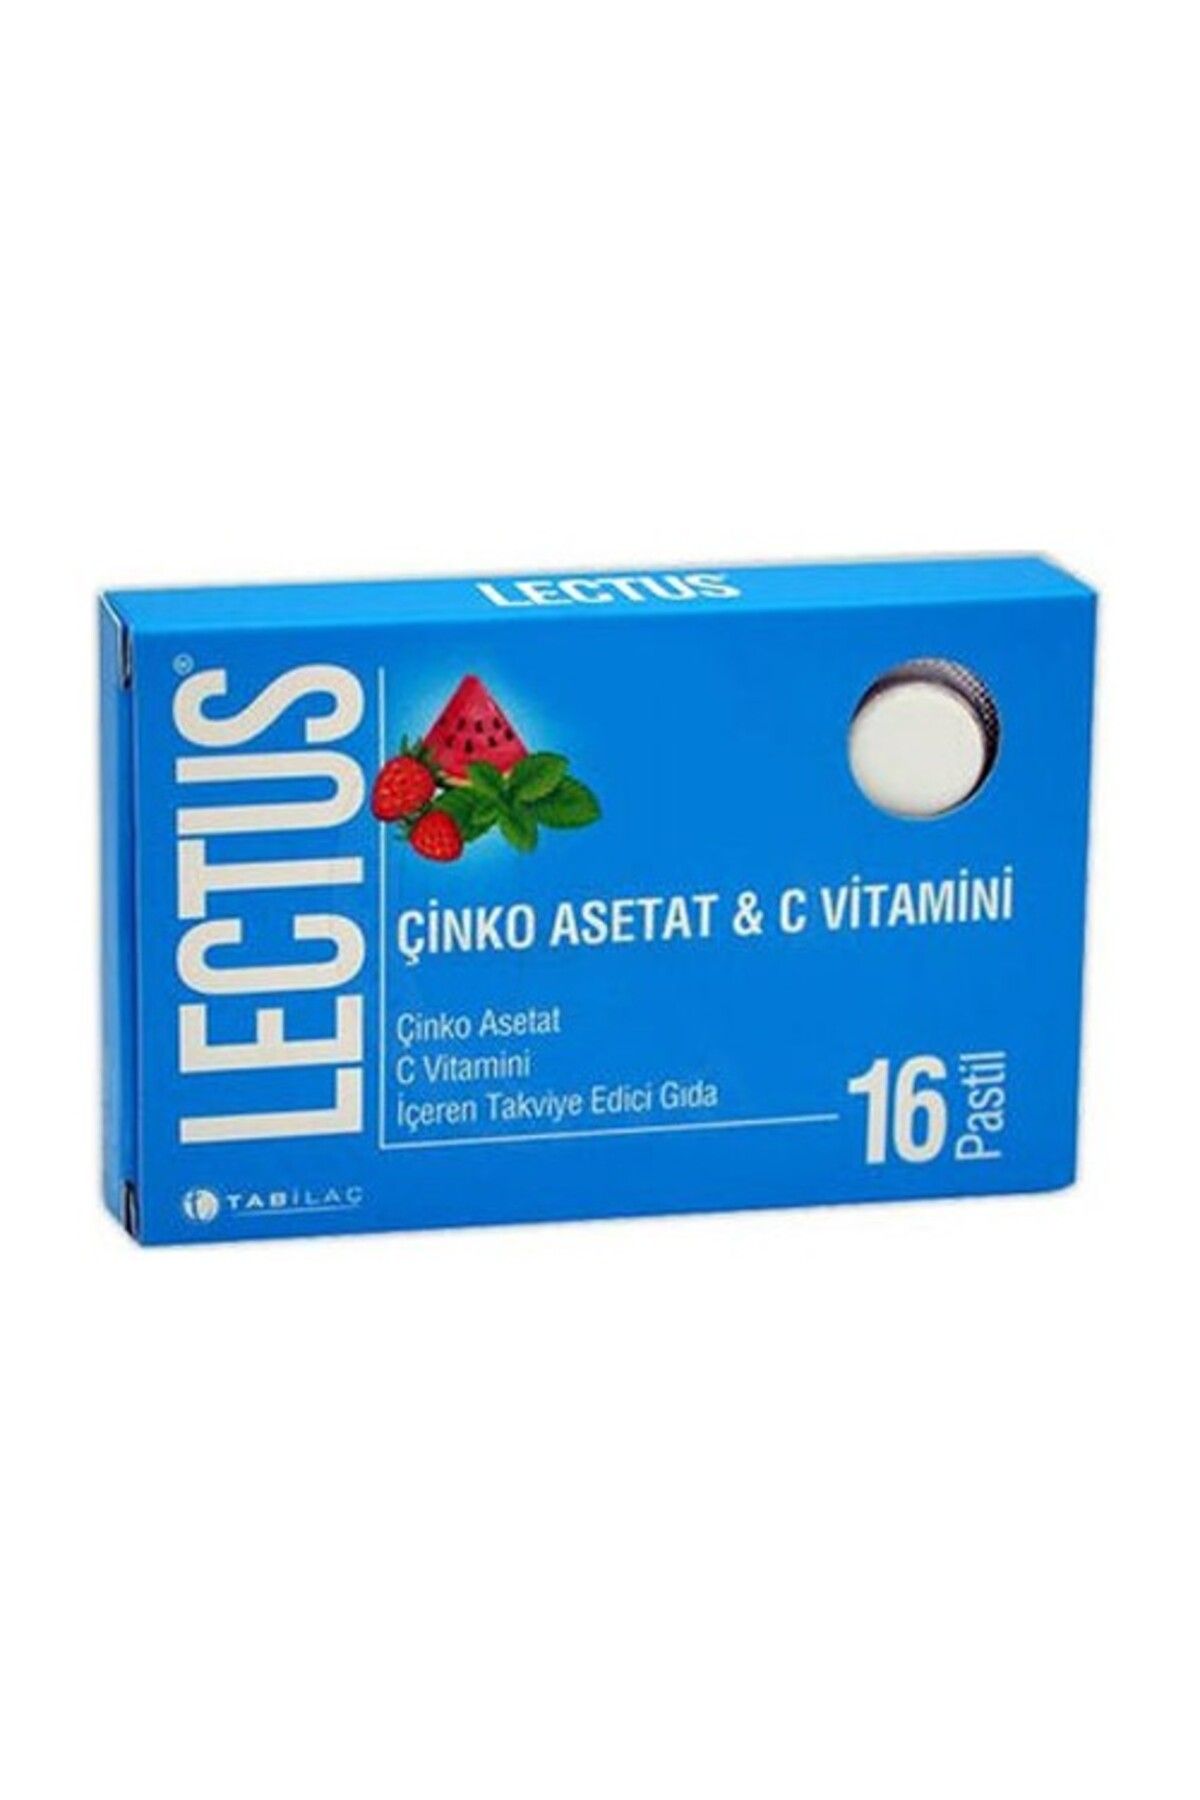 Tab Ilaç Lectus Çinko Asetat & C Vitamini Pastil 16 'lı